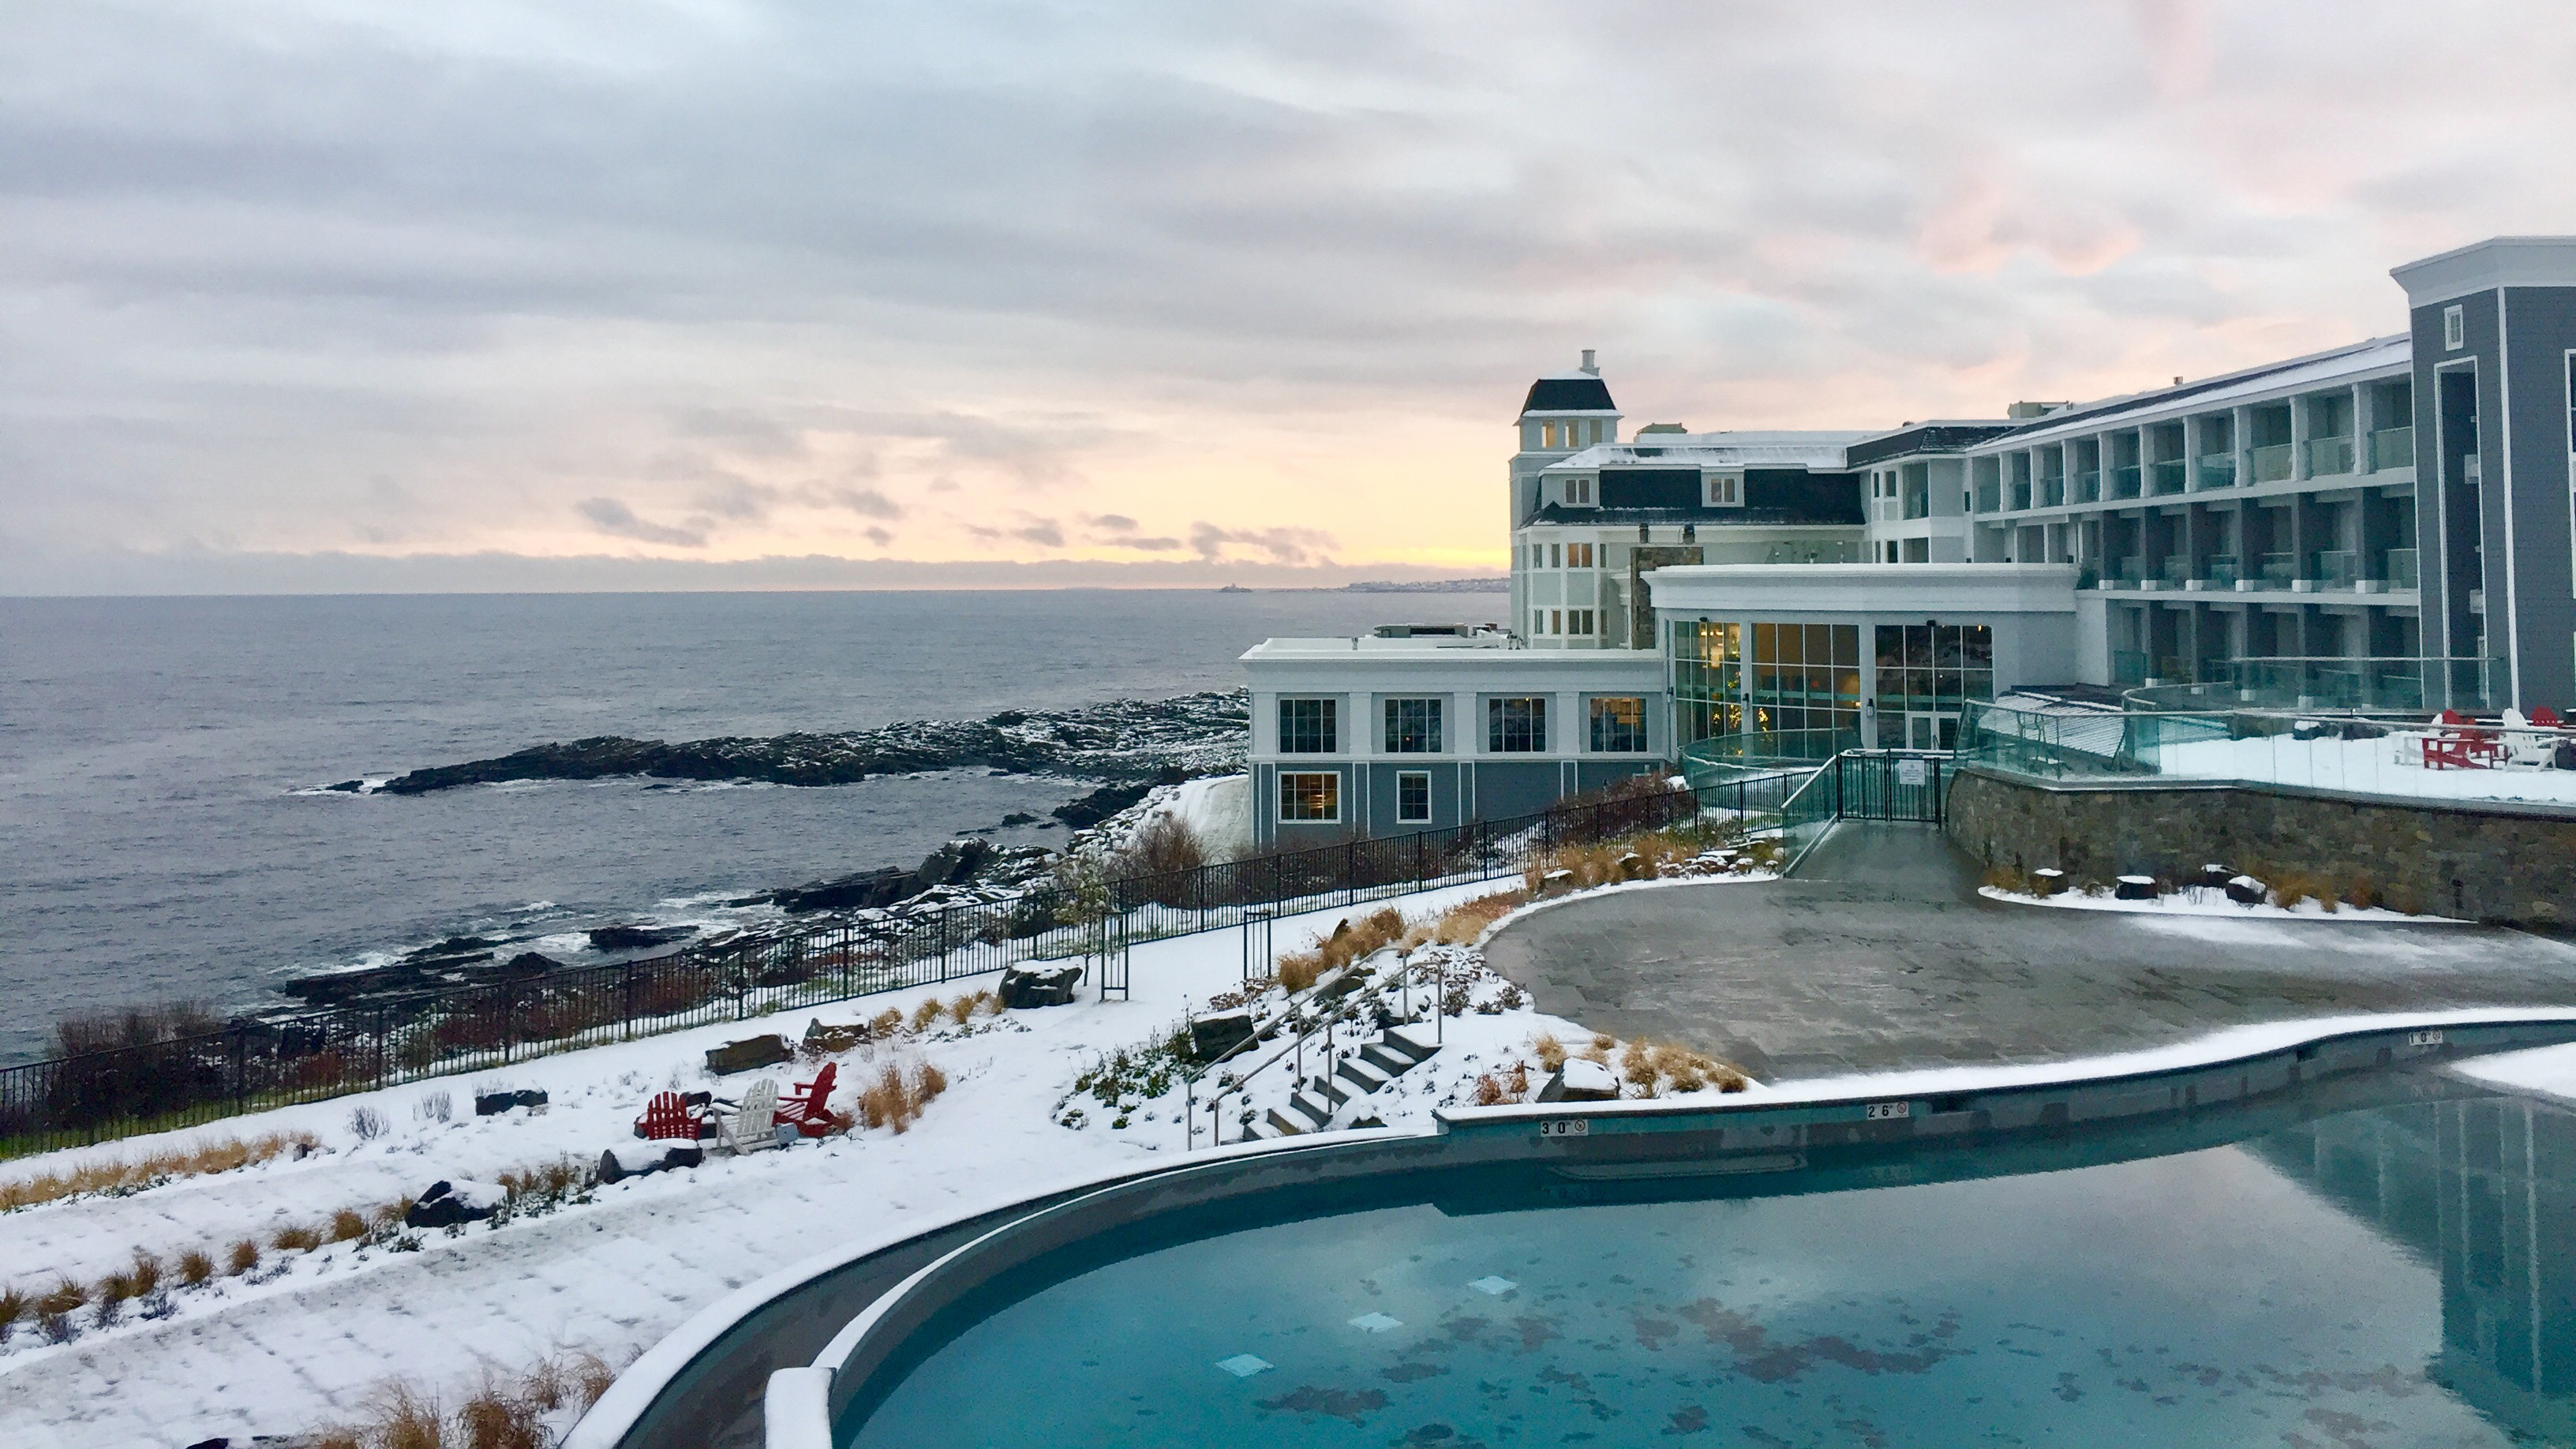 Best Winter Beach Hotels 10 Cold Weather Getaways Cnn Travel